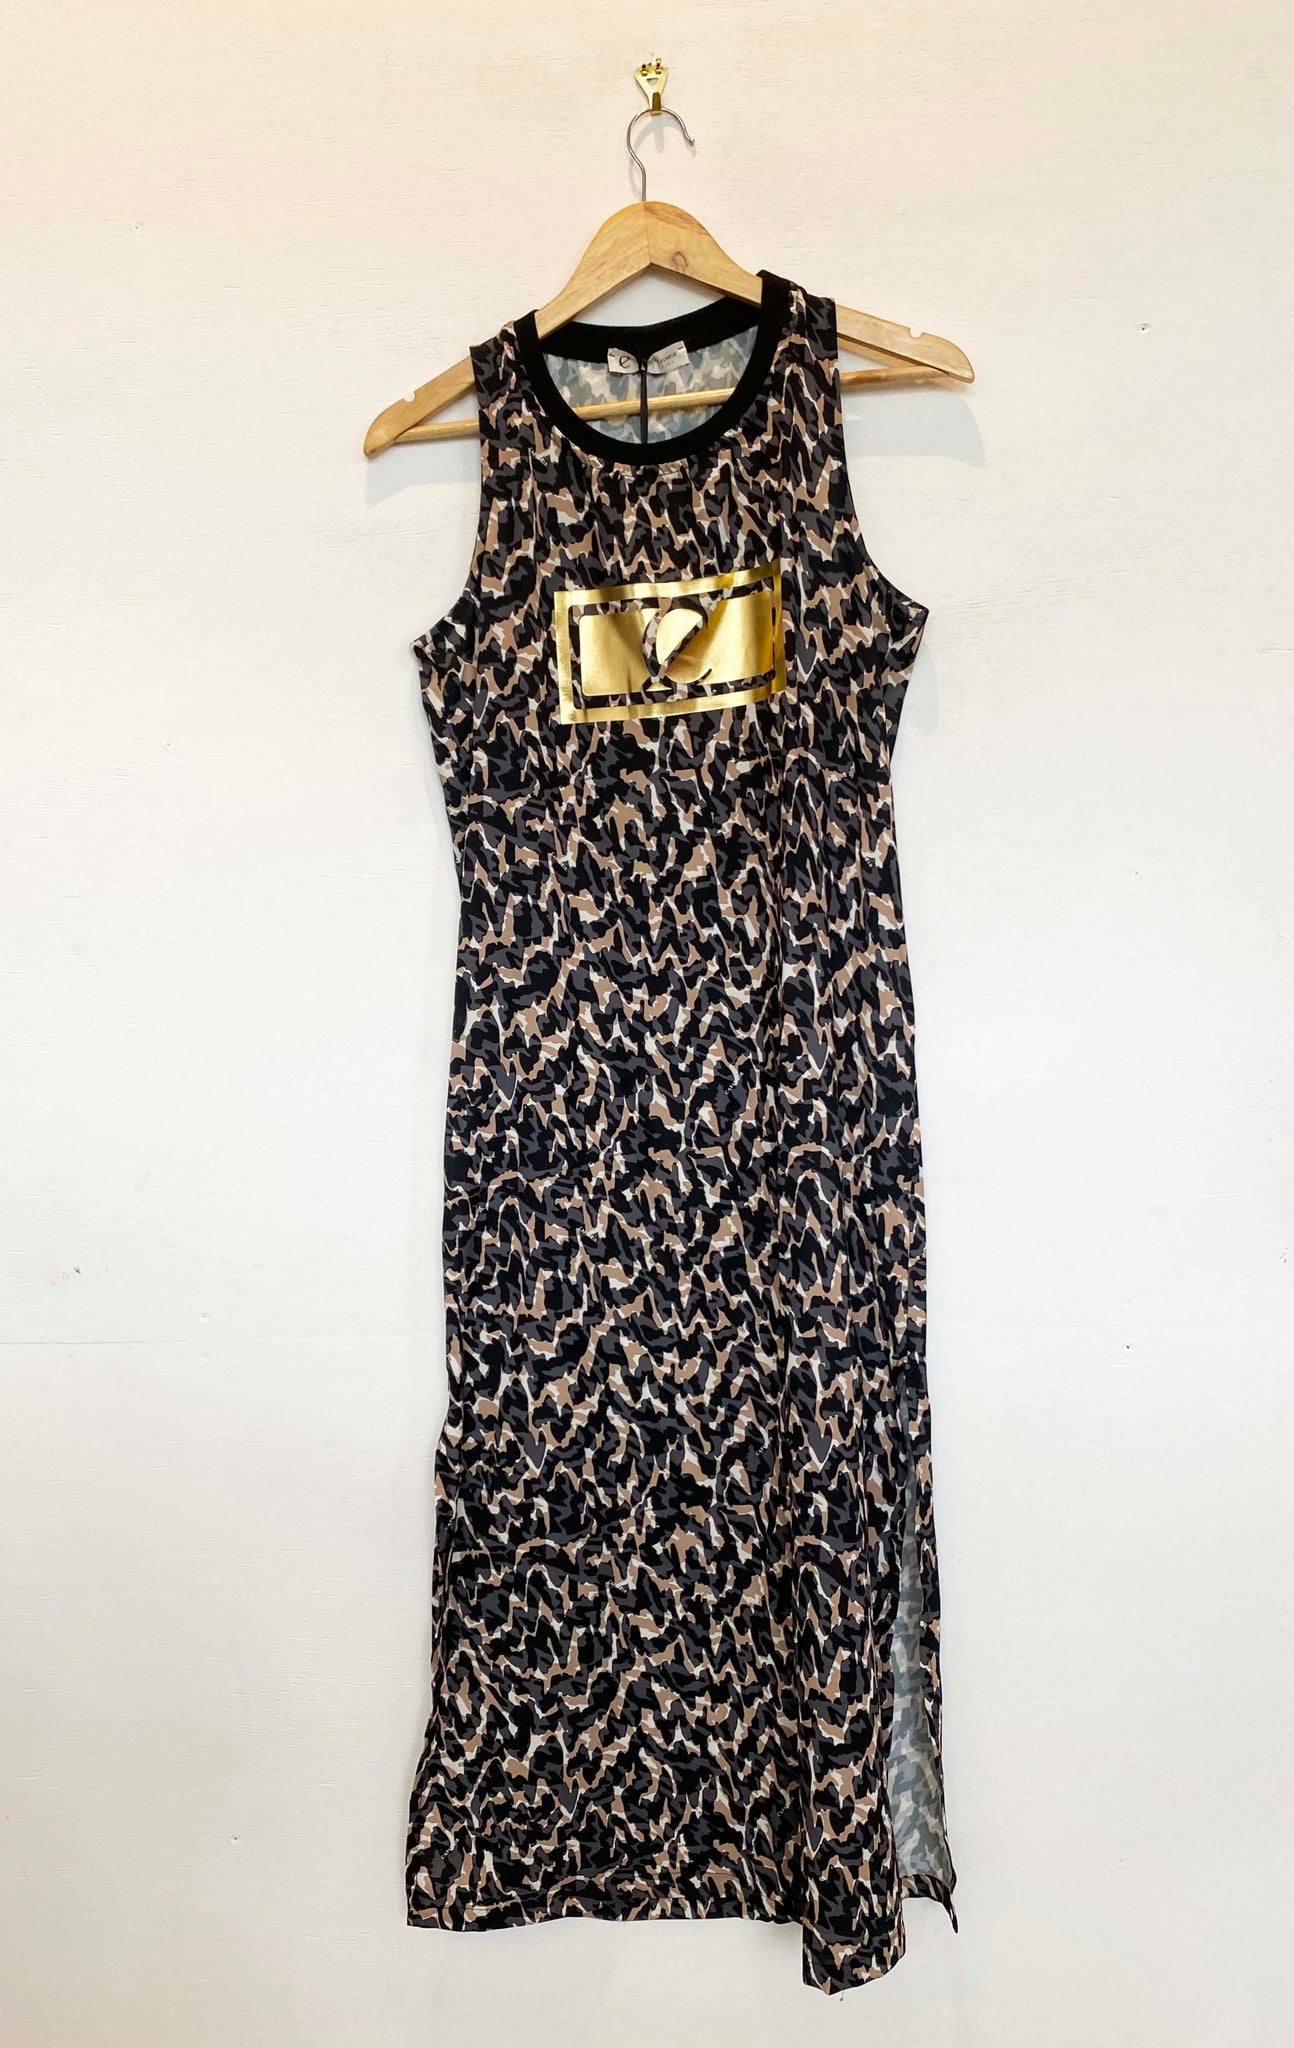 Sleeveless leopard print dress.